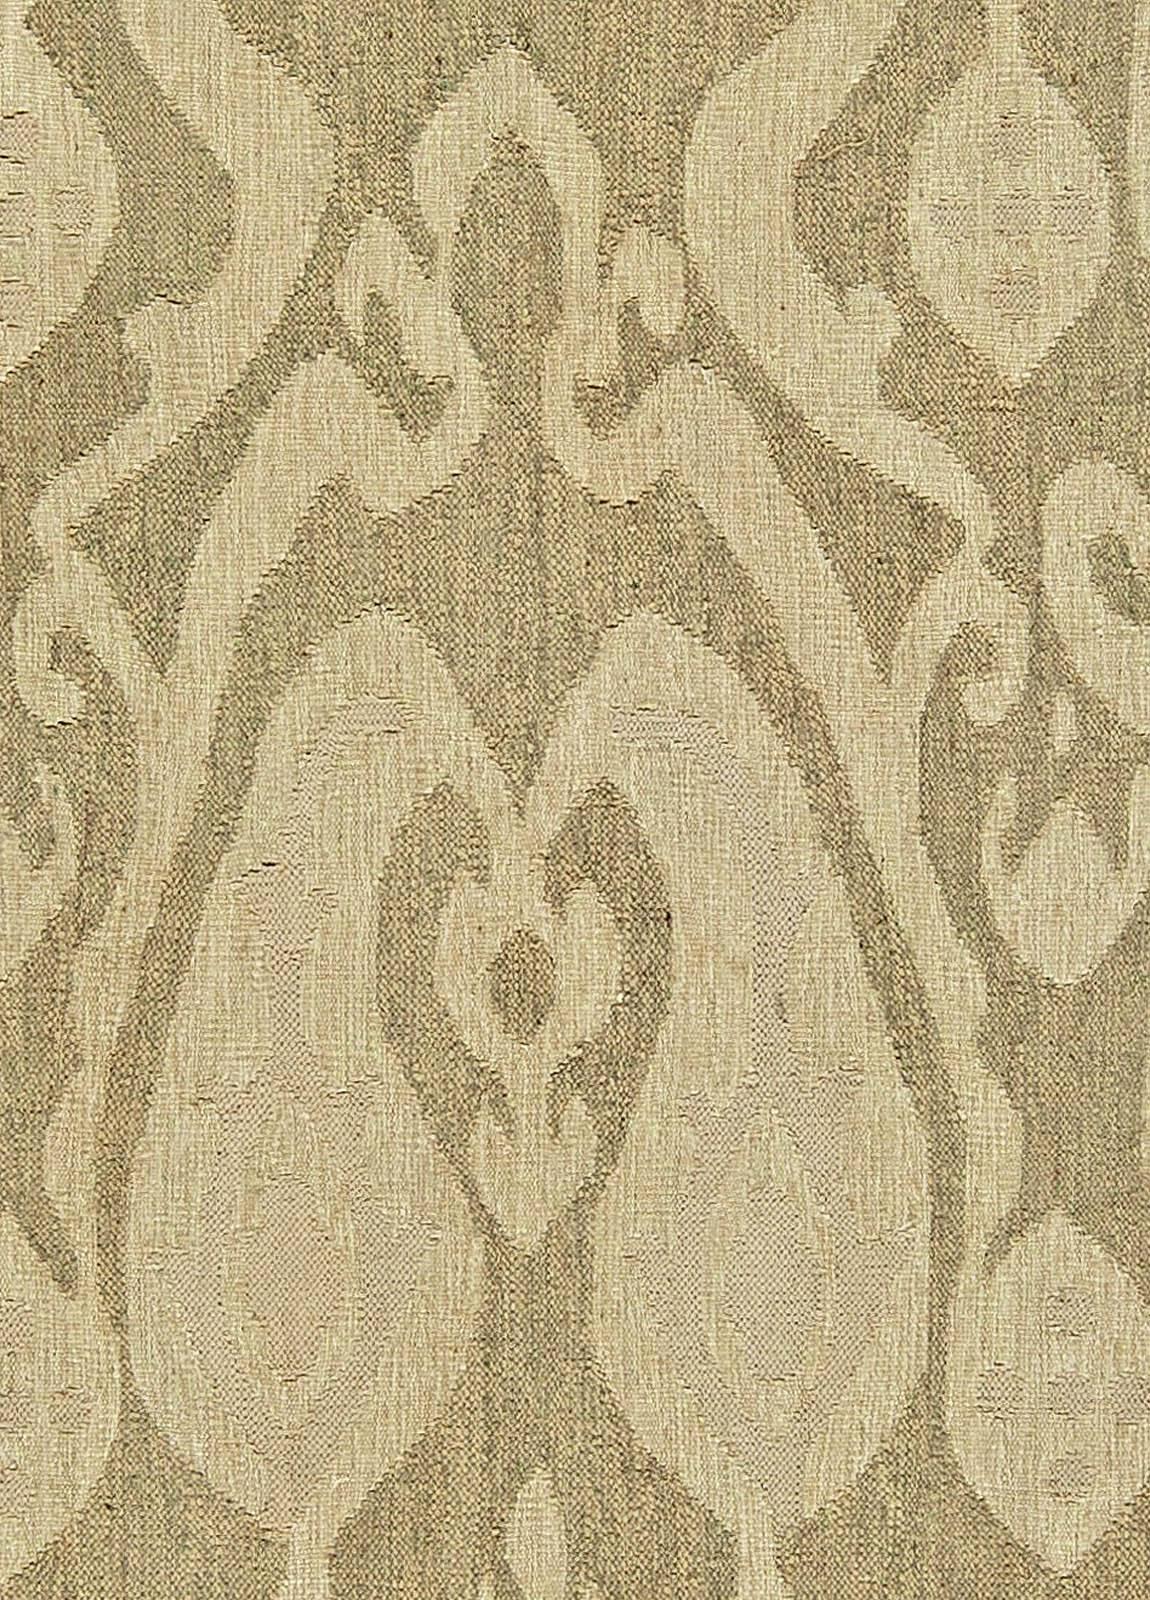 High-Quality modern flat-weave kilim rug by Doris Leslie Blau.
Size: 8.6